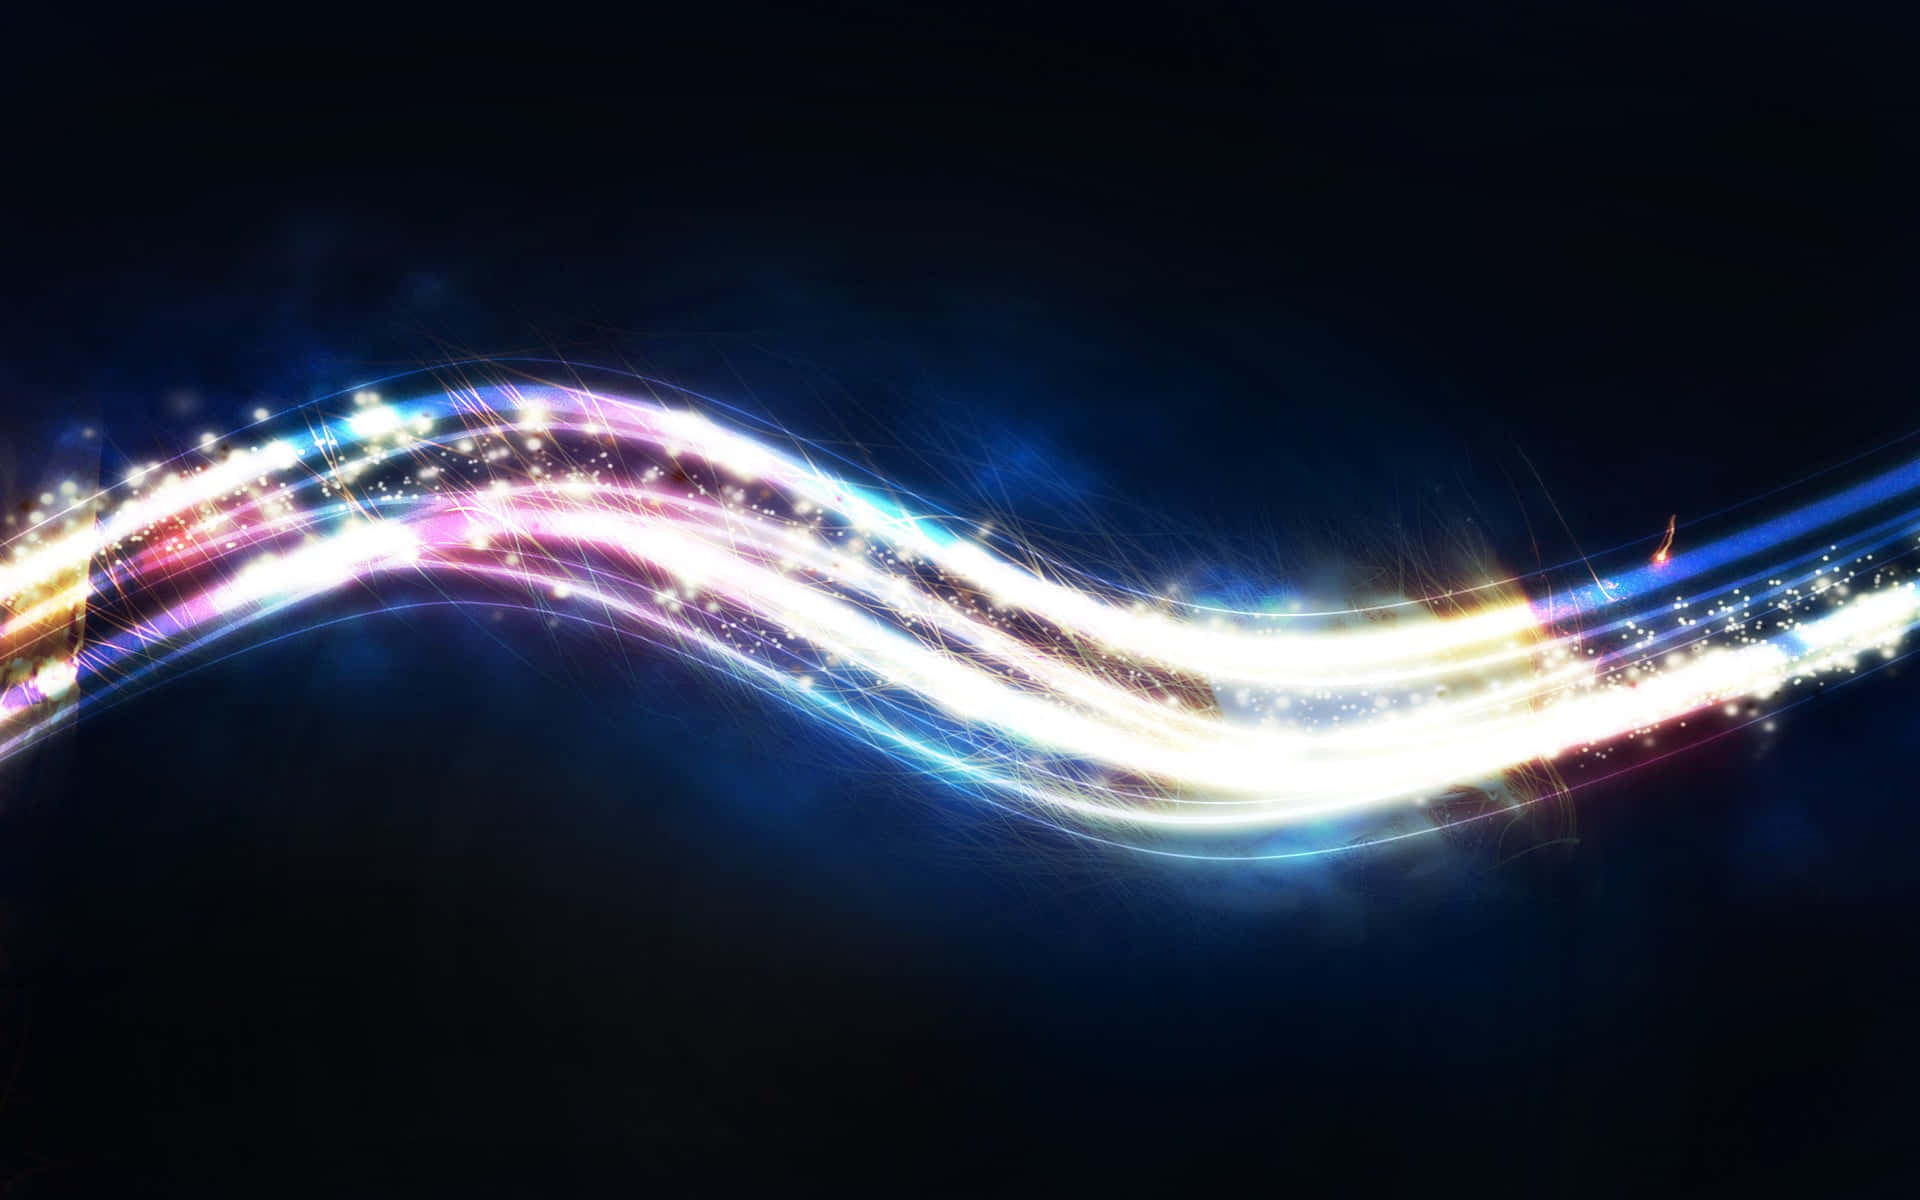 Abstract Neon Light Waves.jpg Wallpaper